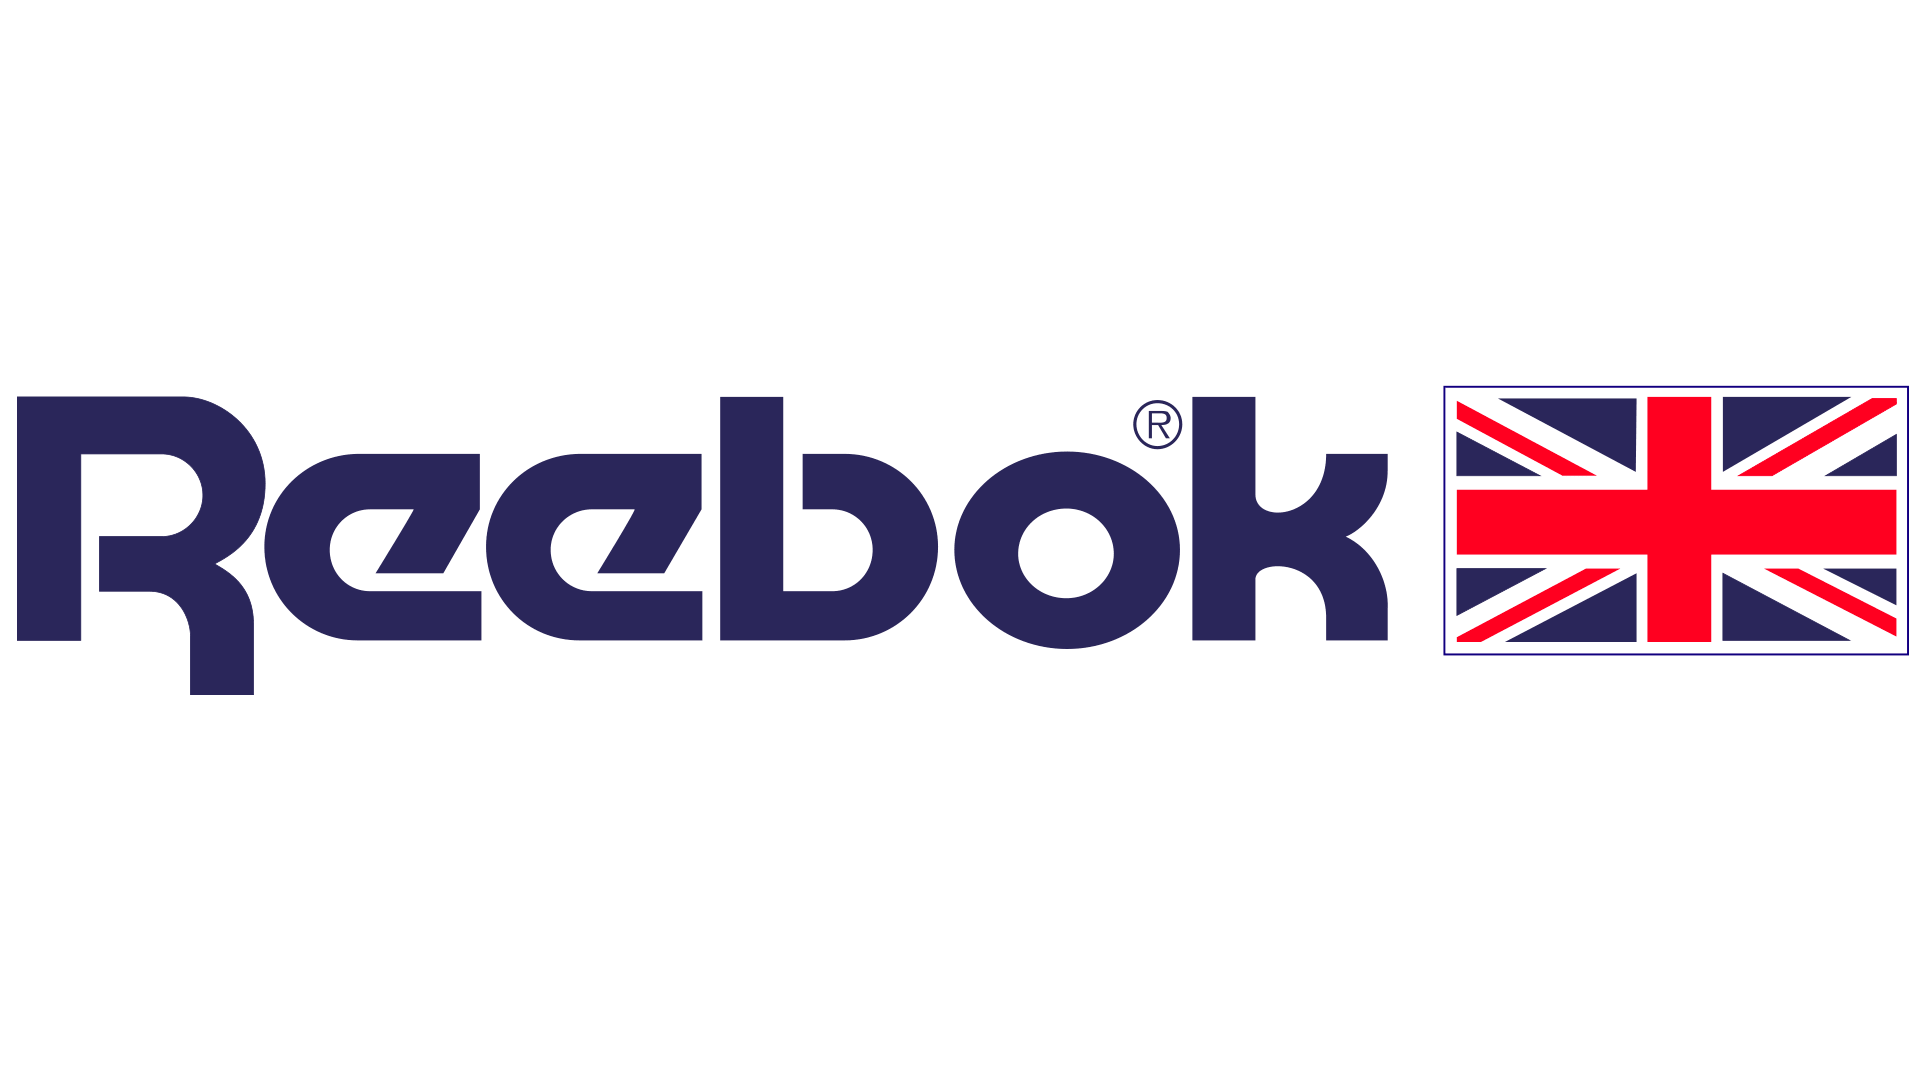 nuevo logo de reebok